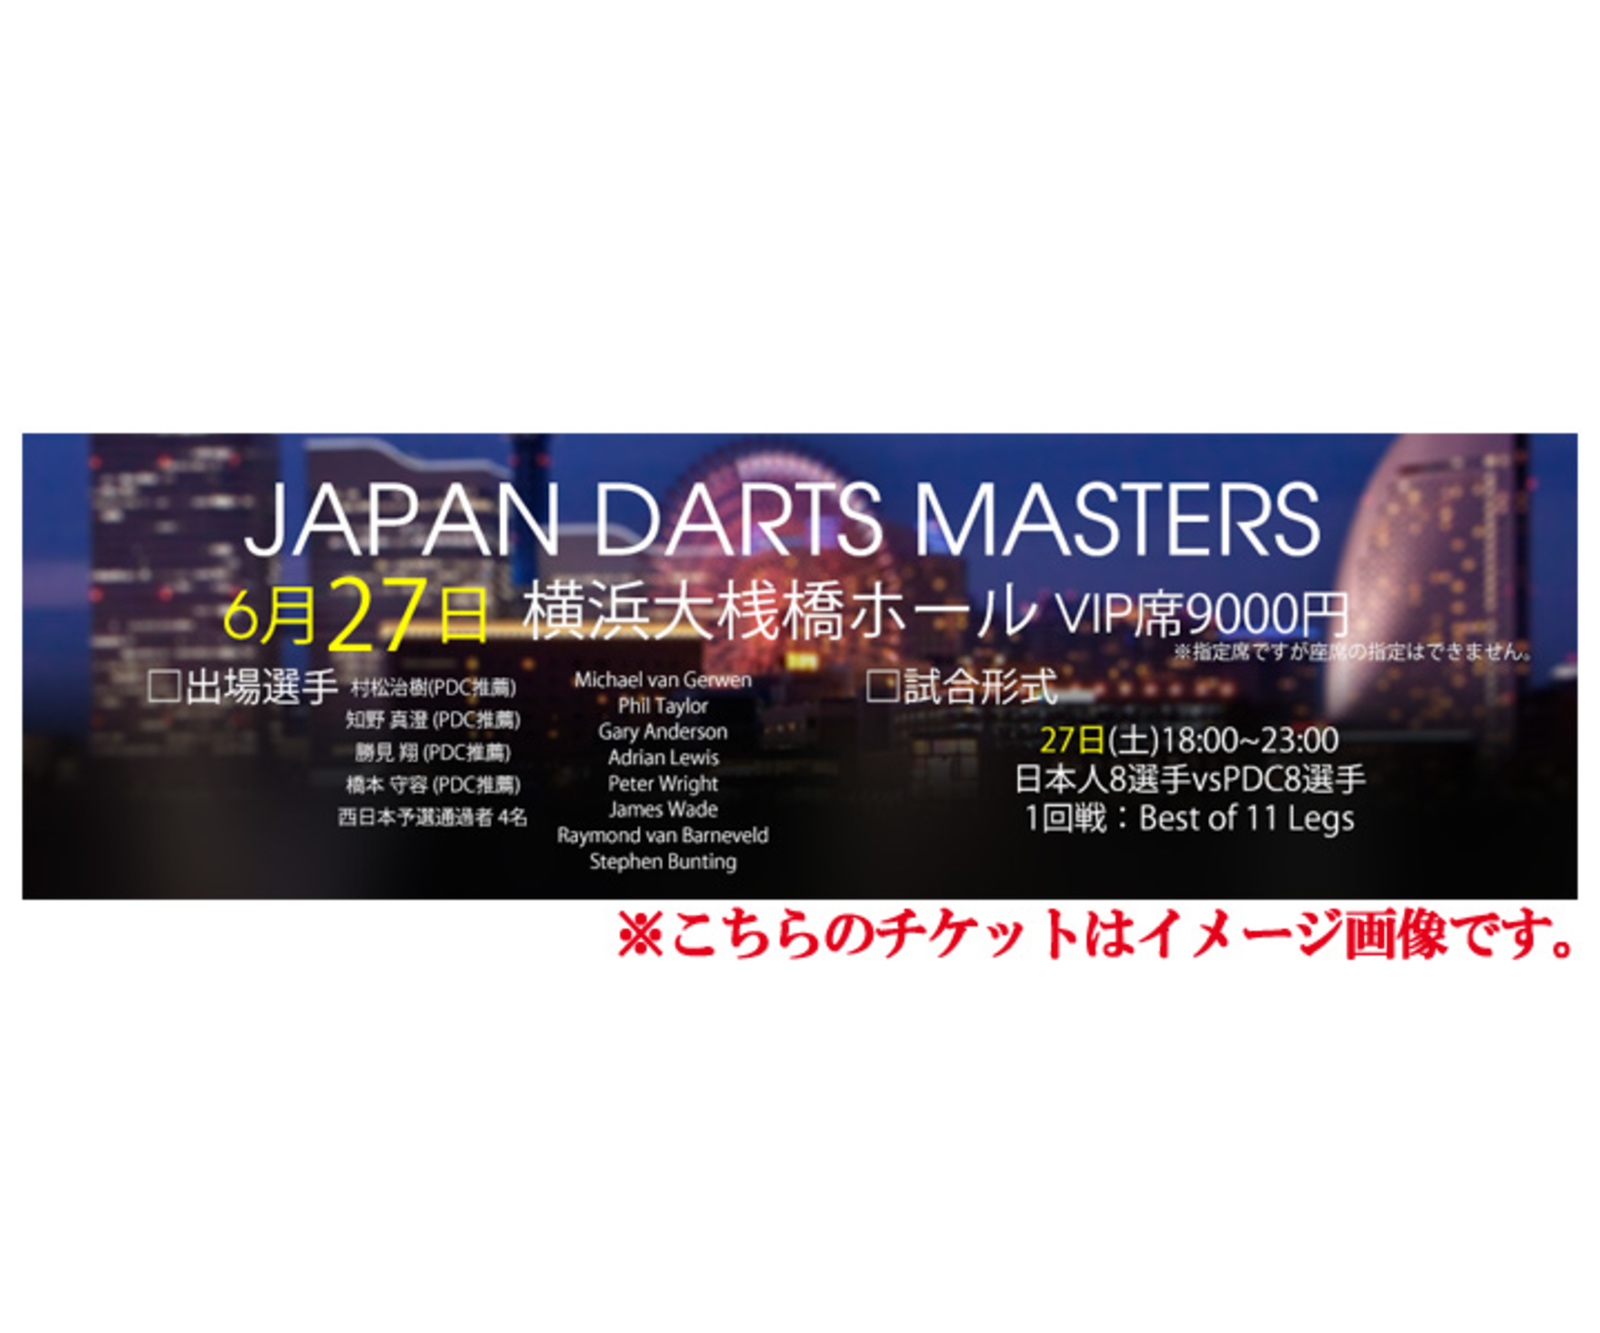  PDC 2015 JAPAN DARTS MASTERS 27() åVIPʤβ